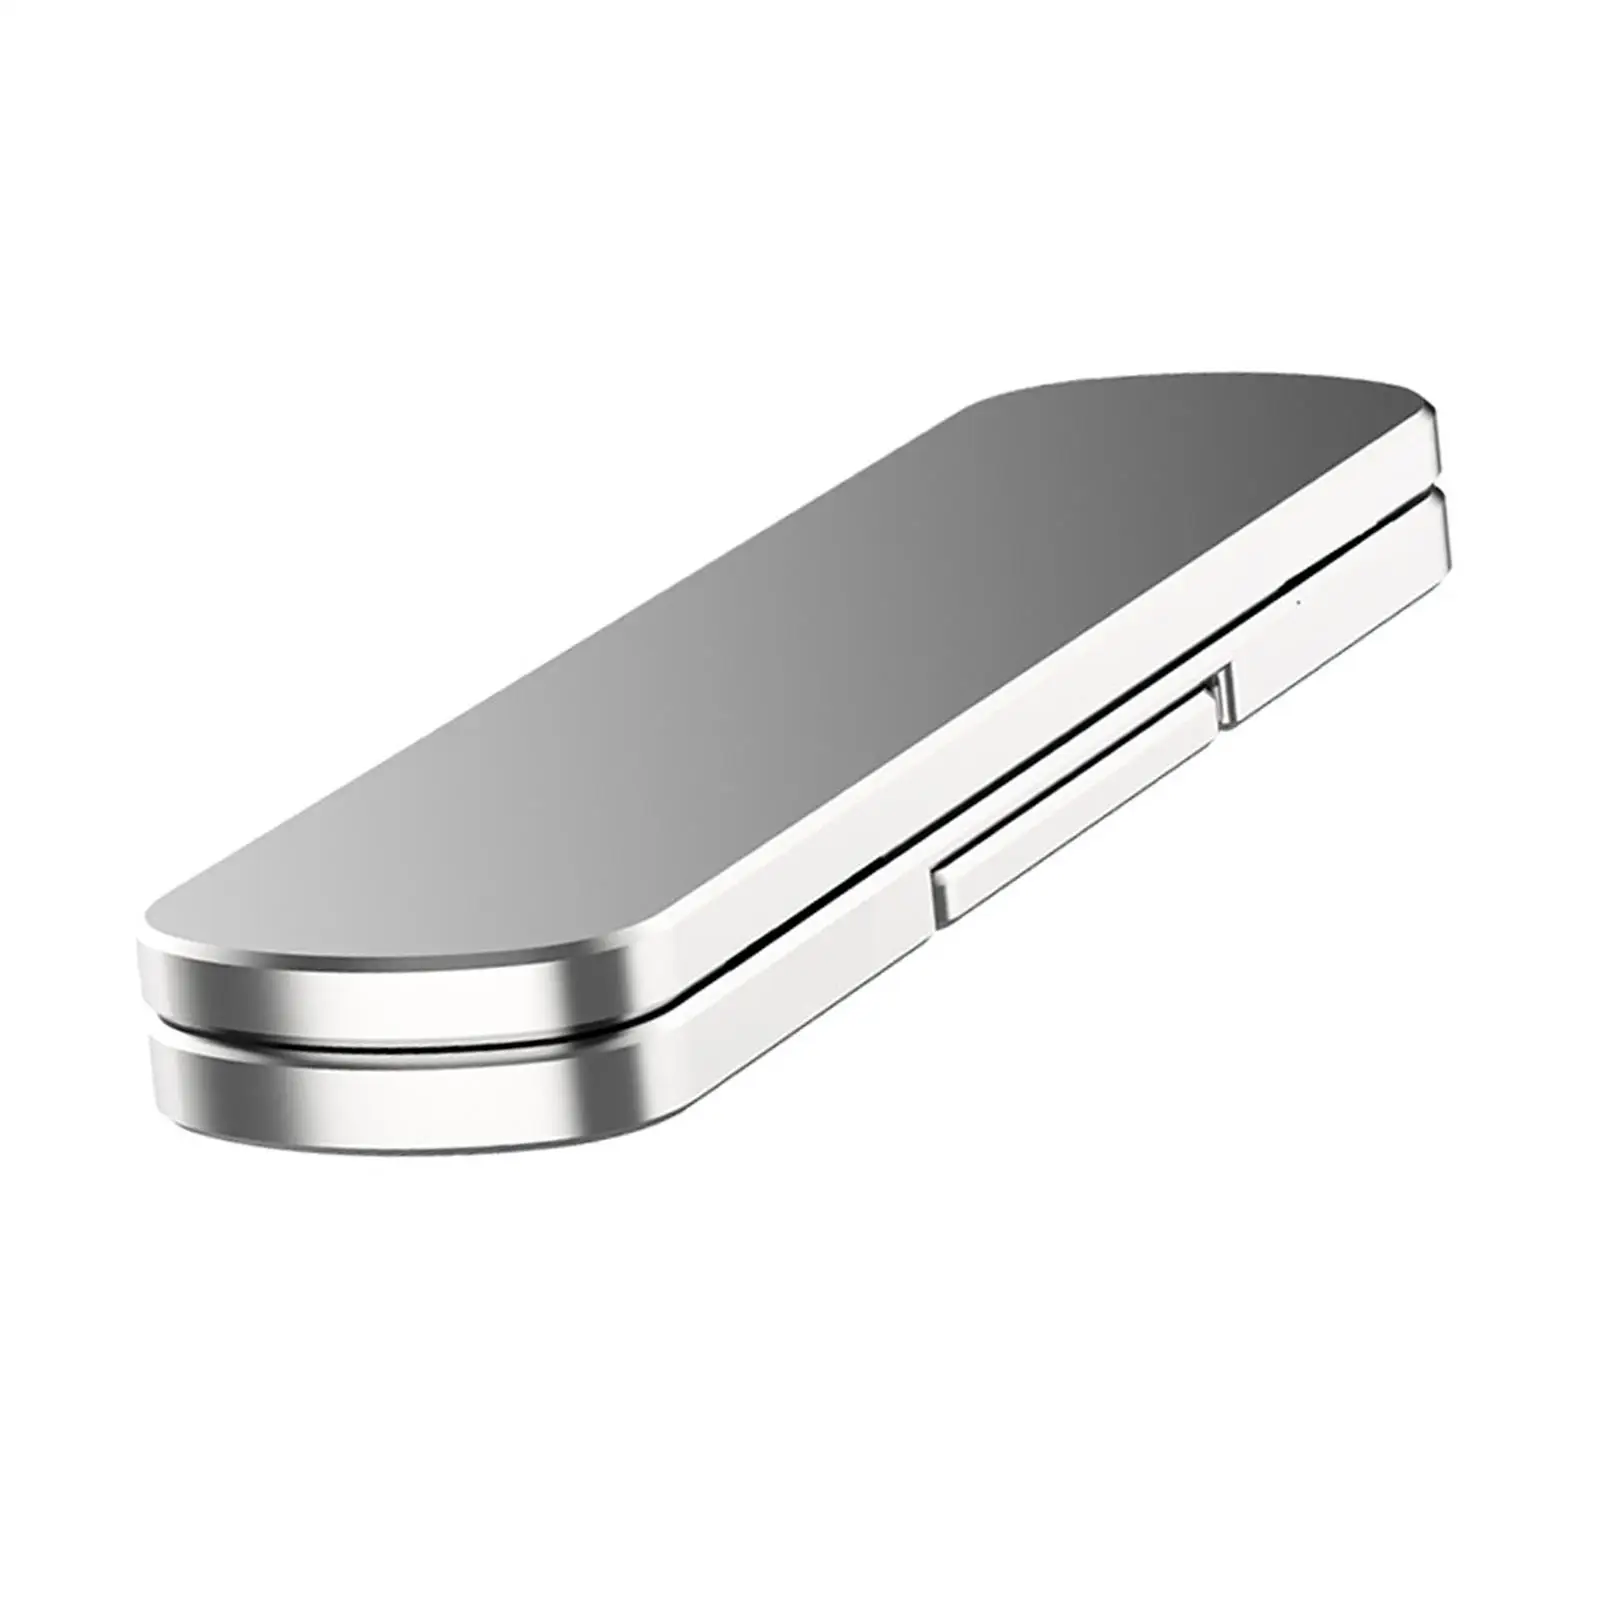 Portable Mobile Phone Stand Aluminum Alloy Pocket Size Adjustable for Desk Travel